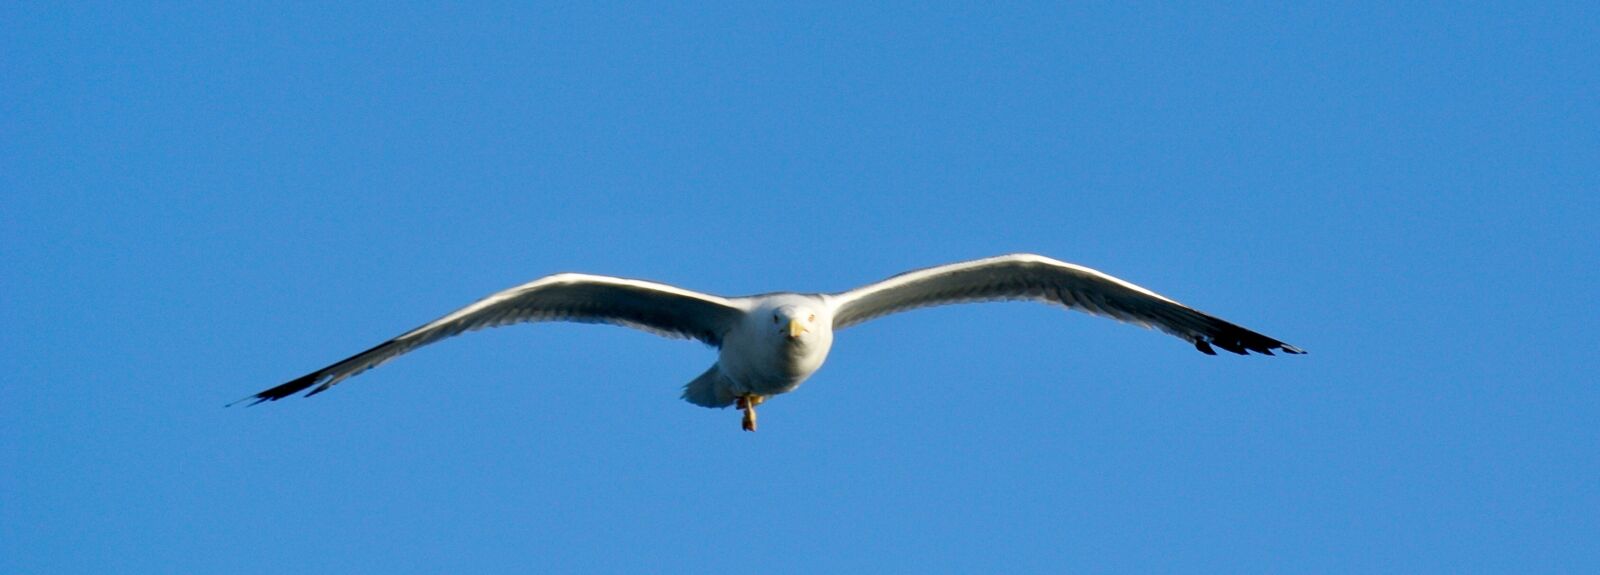 Nikon 1 V1 sample photo. Bird, seagull, nature photography